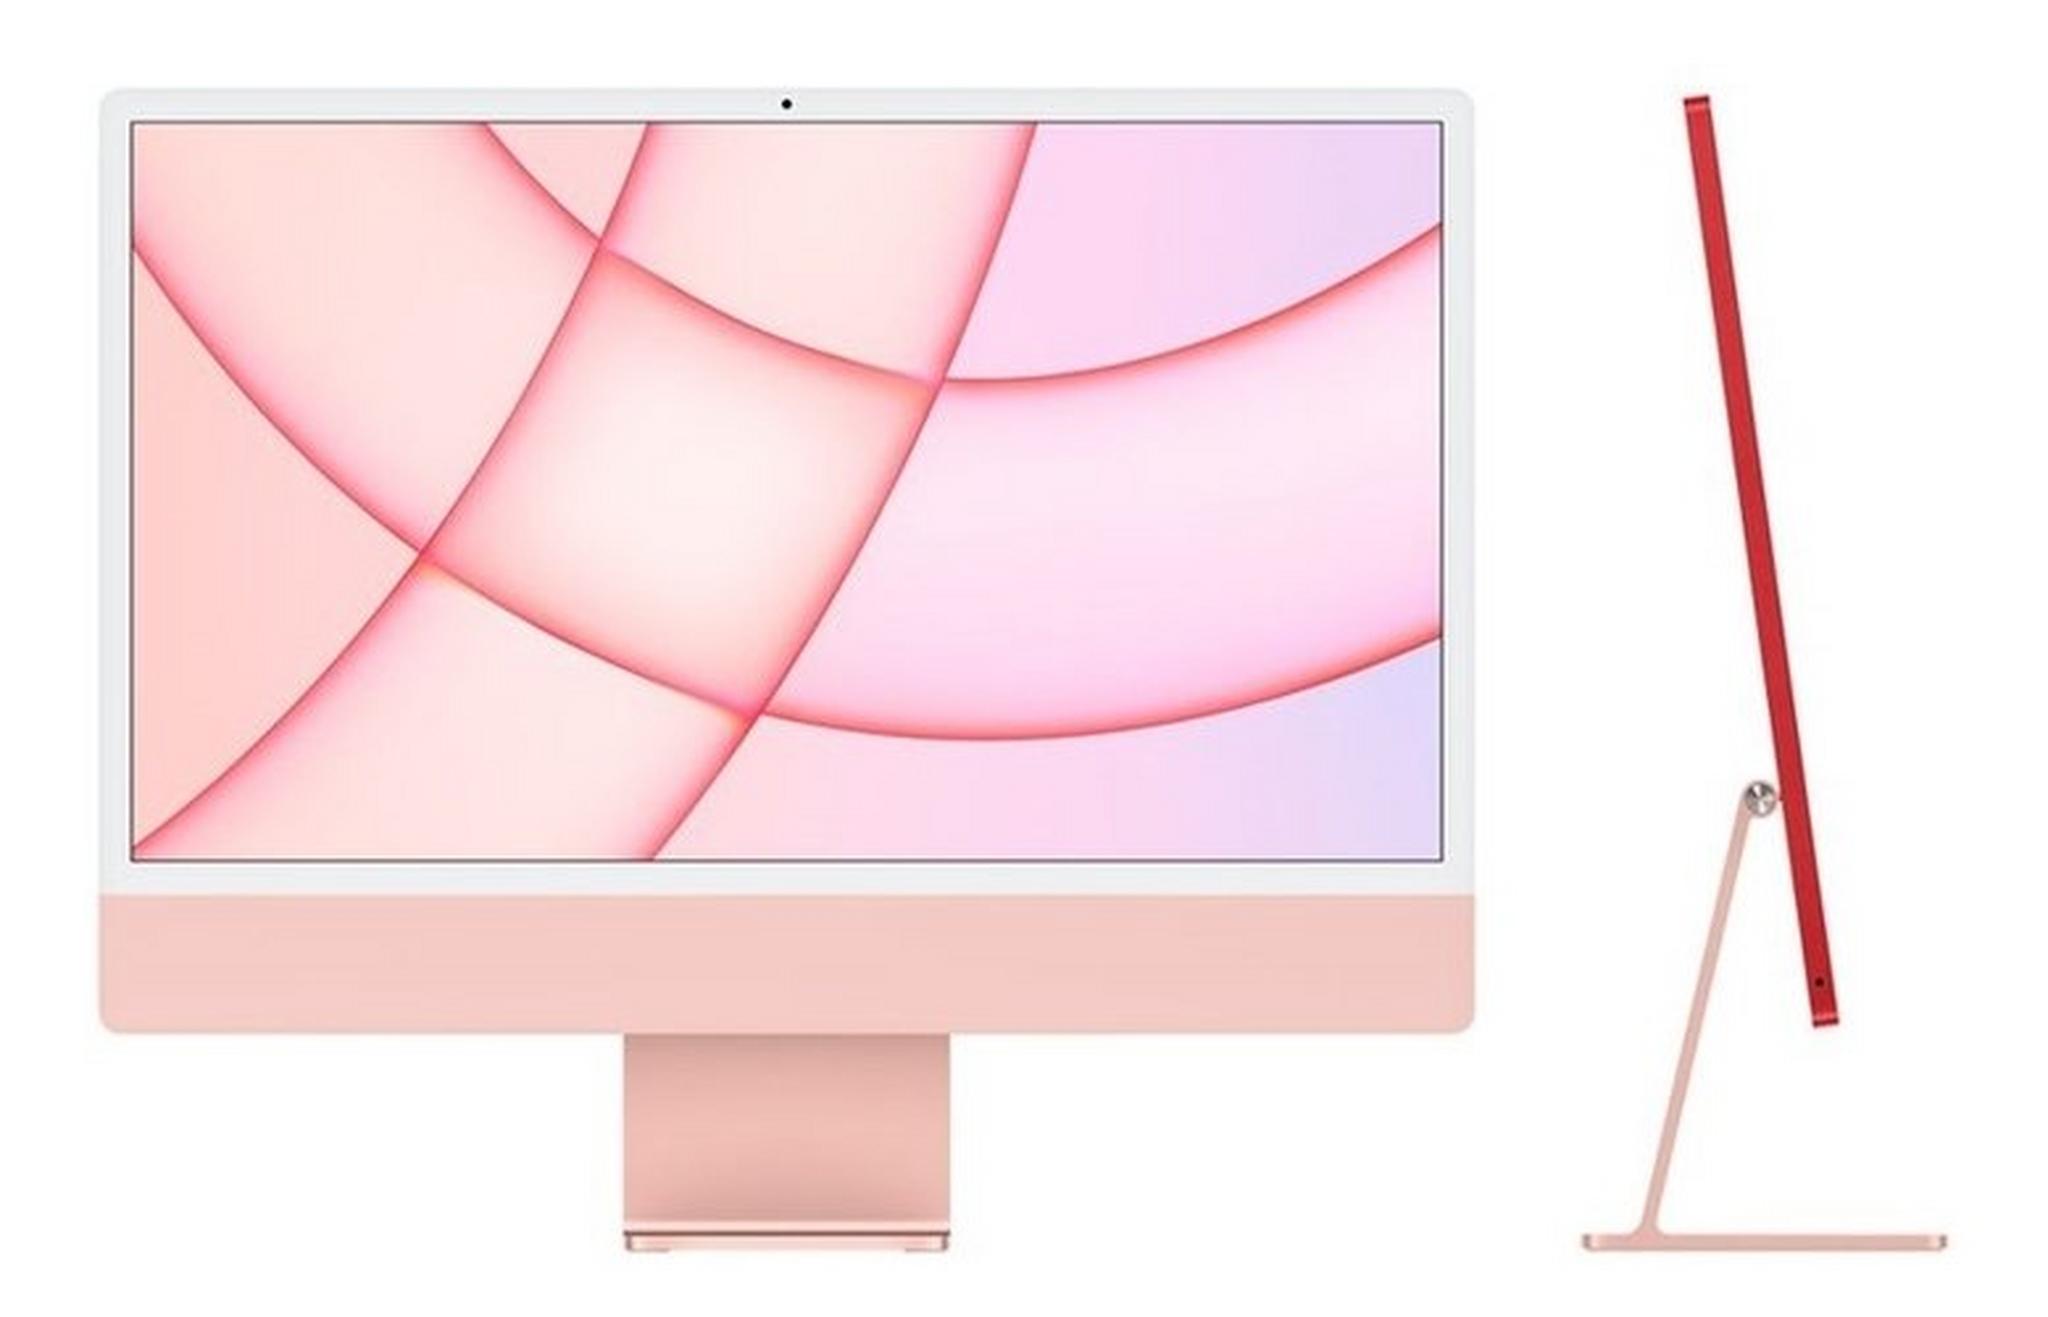 Apple iMac M1 Processor 8GB RAM 256 SSD 24-inch 4.5K Retina Display All-In-One Desktop (2021) - Pink